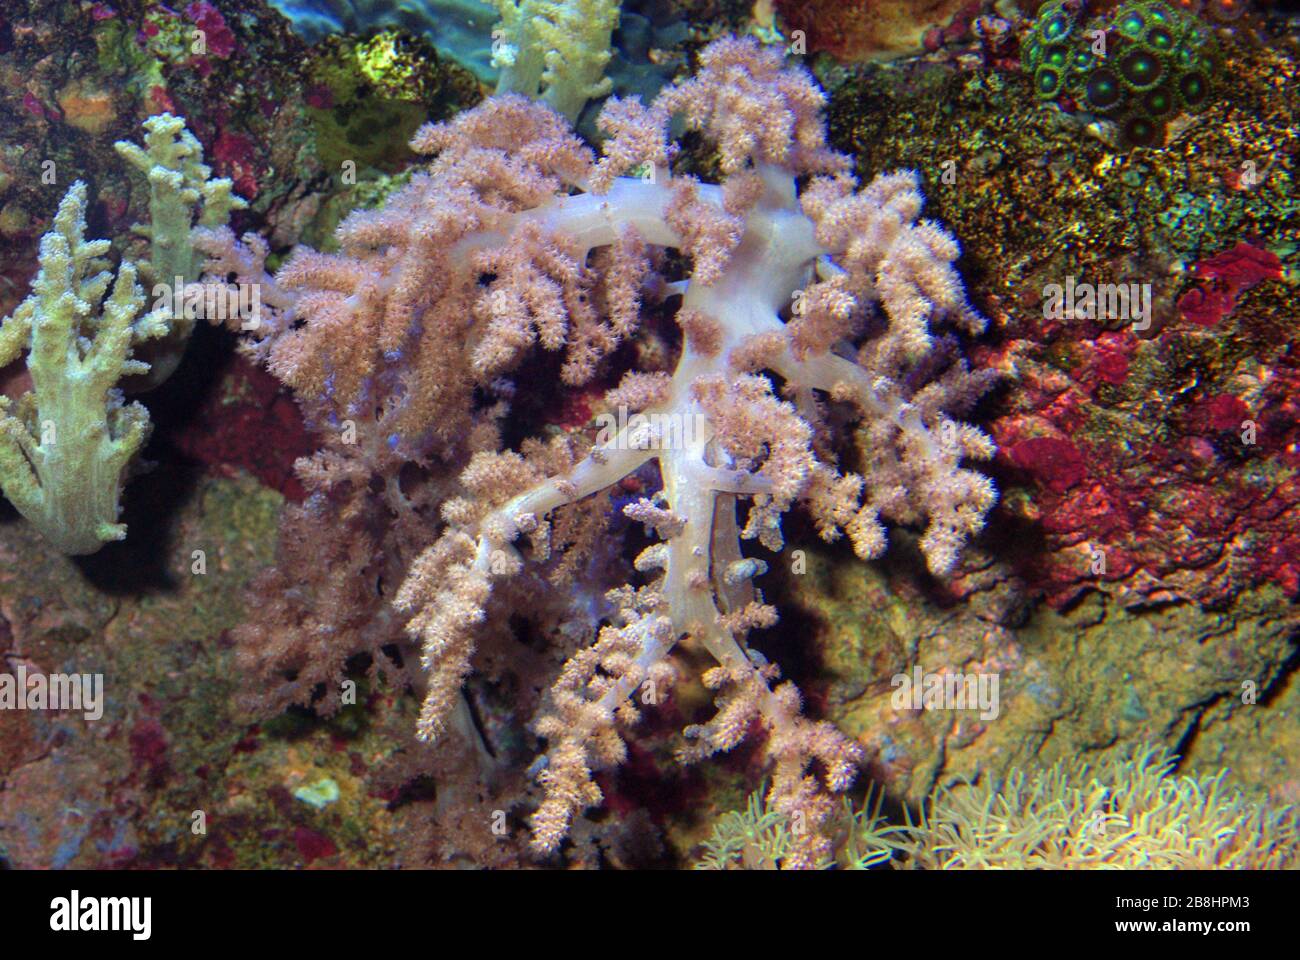 Cauliflower soft coral, Lemnalia sp. Stock Photo